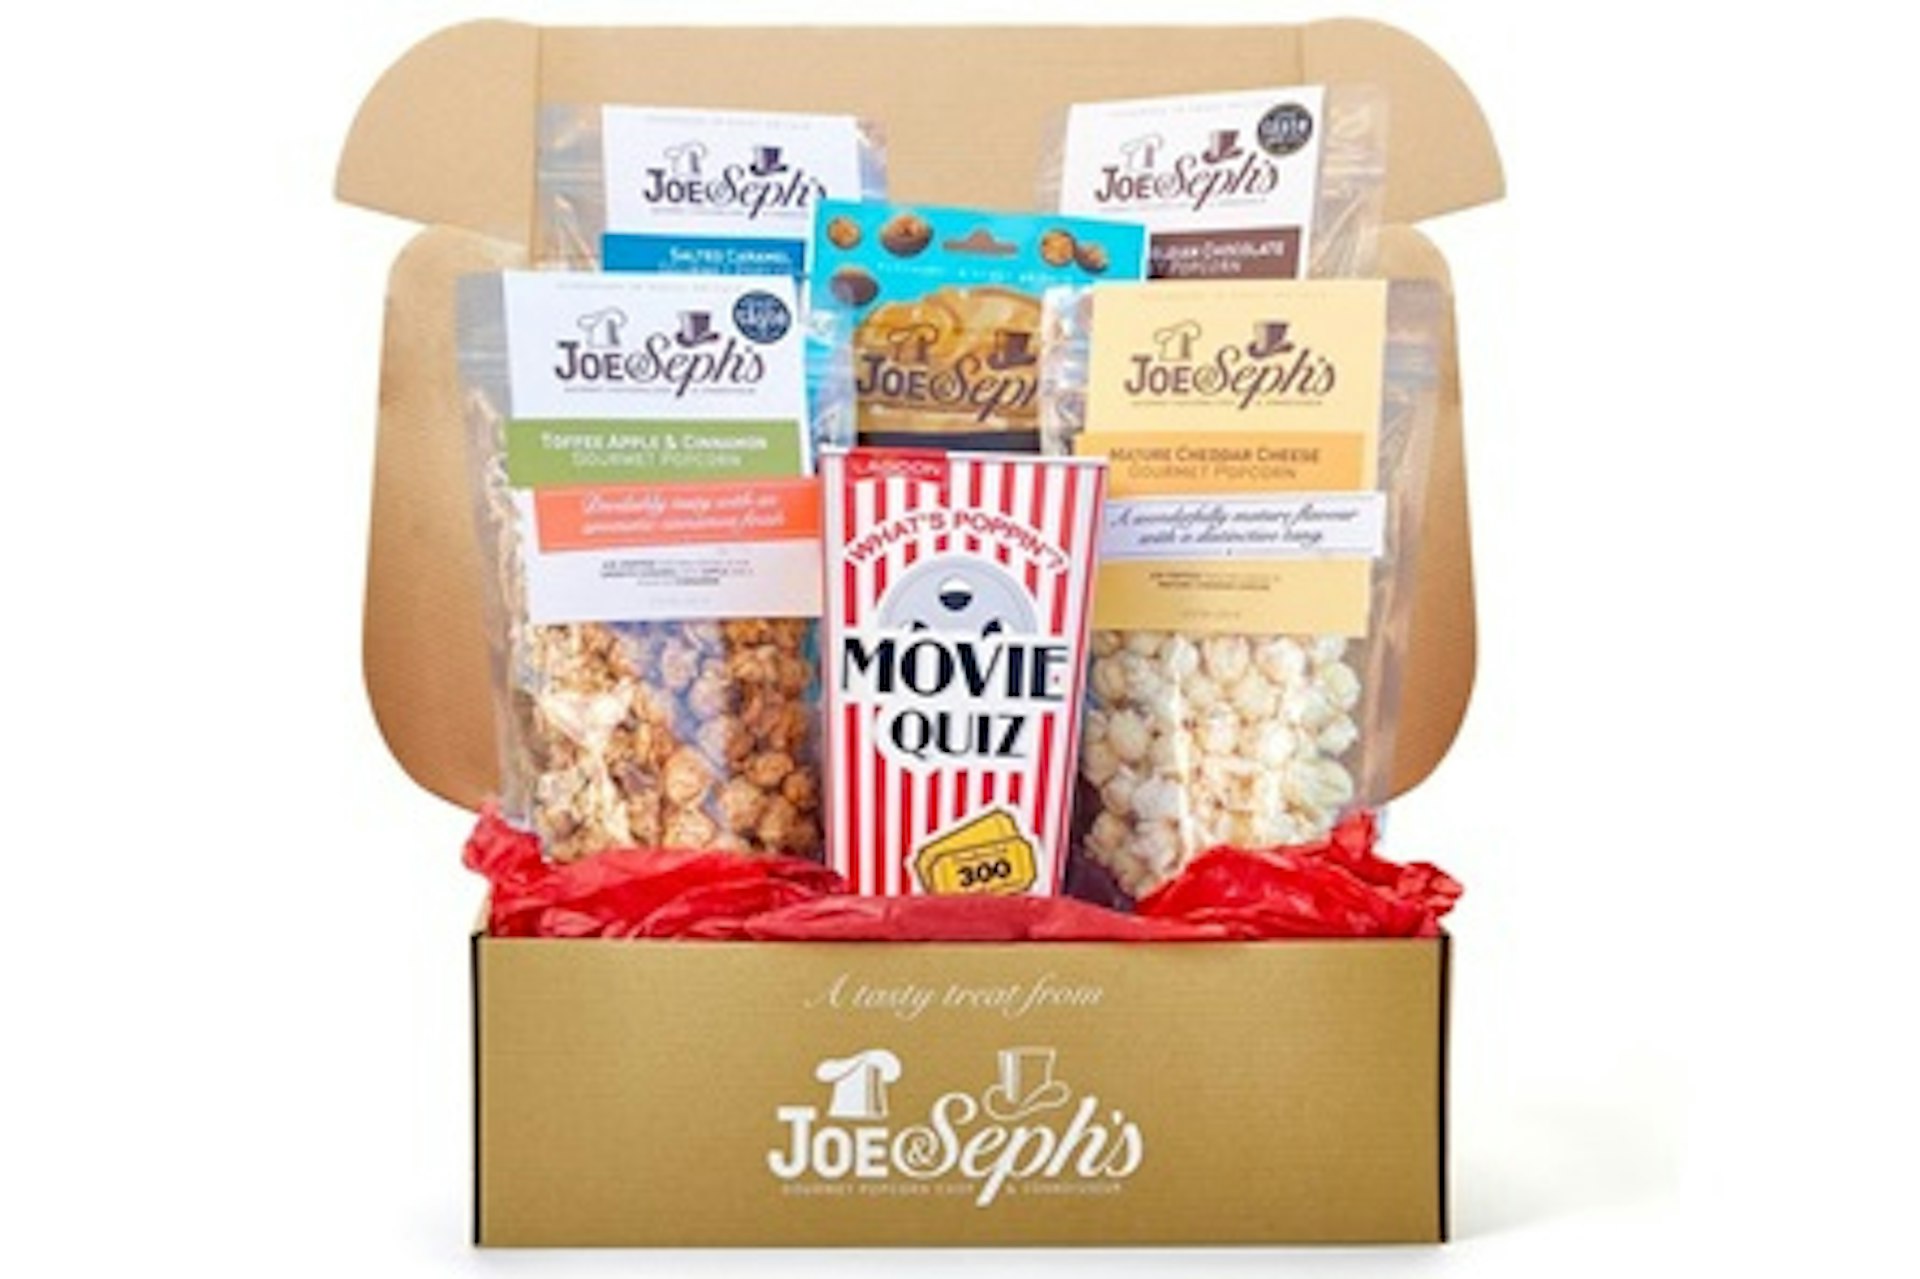 Movie Quiz Gift Box with Joe & Seph’s Popcorn